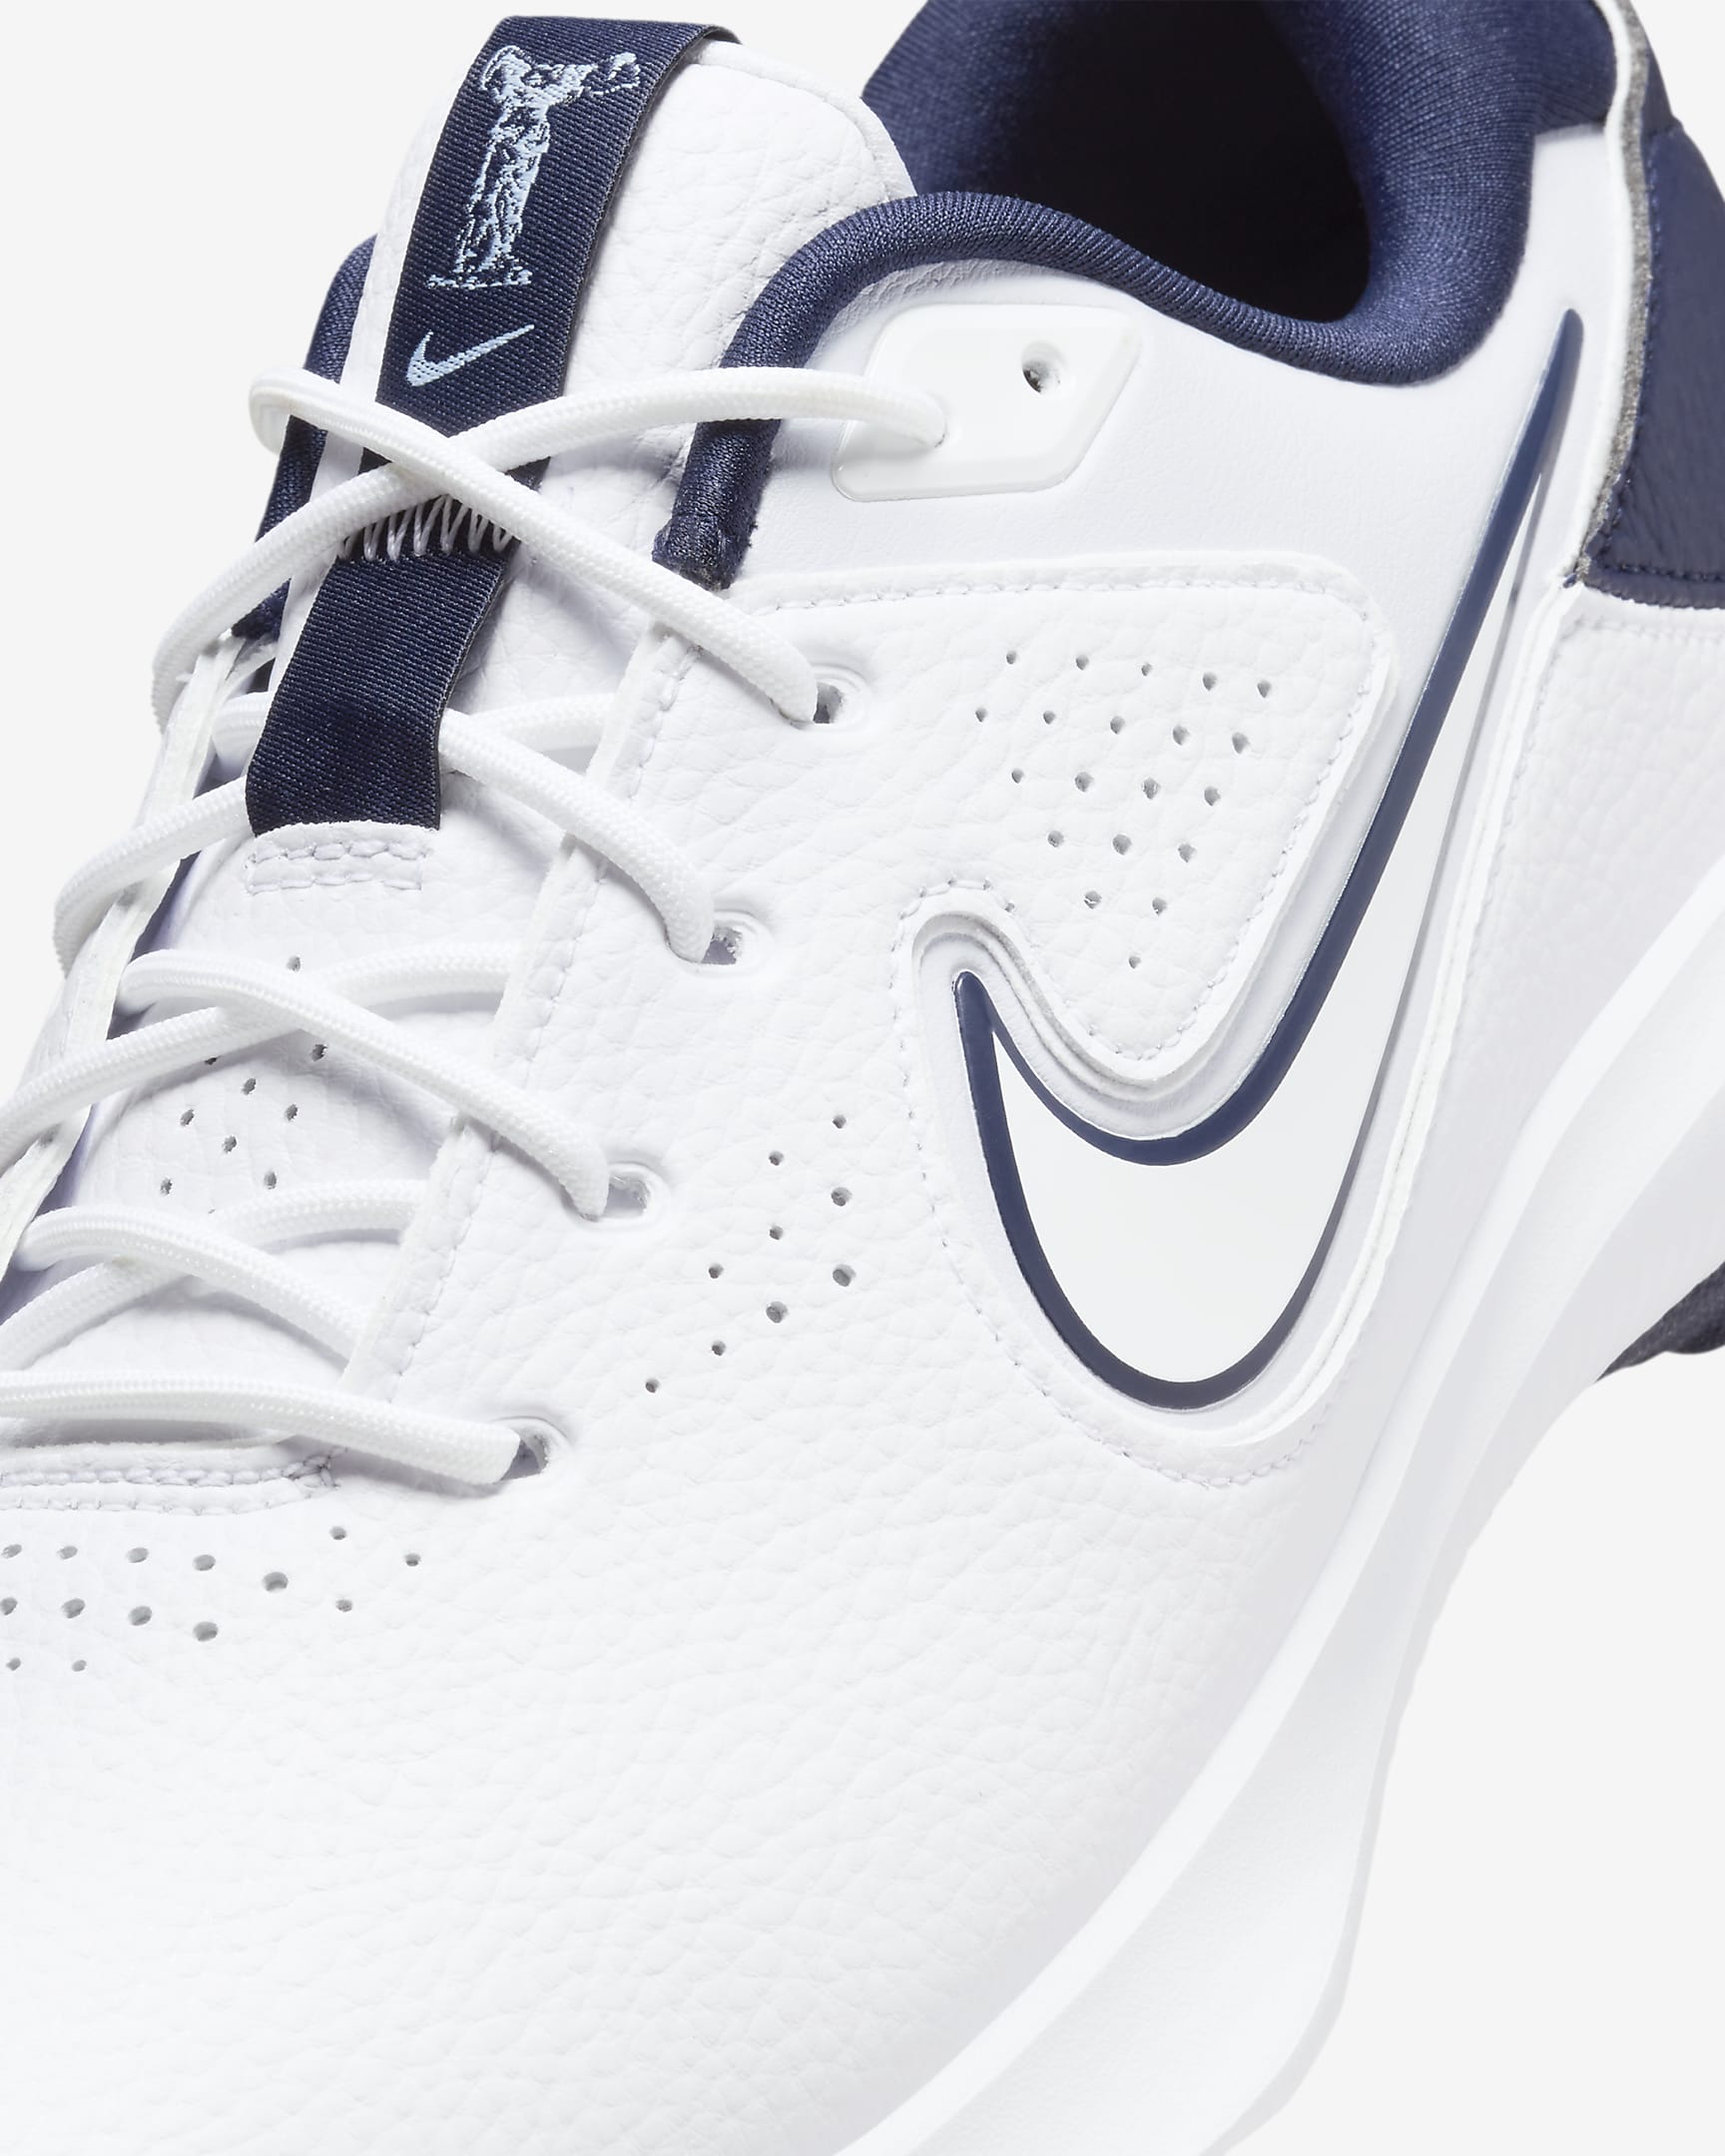 Nike Victory Pro 3 Men's Golf Shoes - White/Obsidian/Aquarius Blue/Football Grey